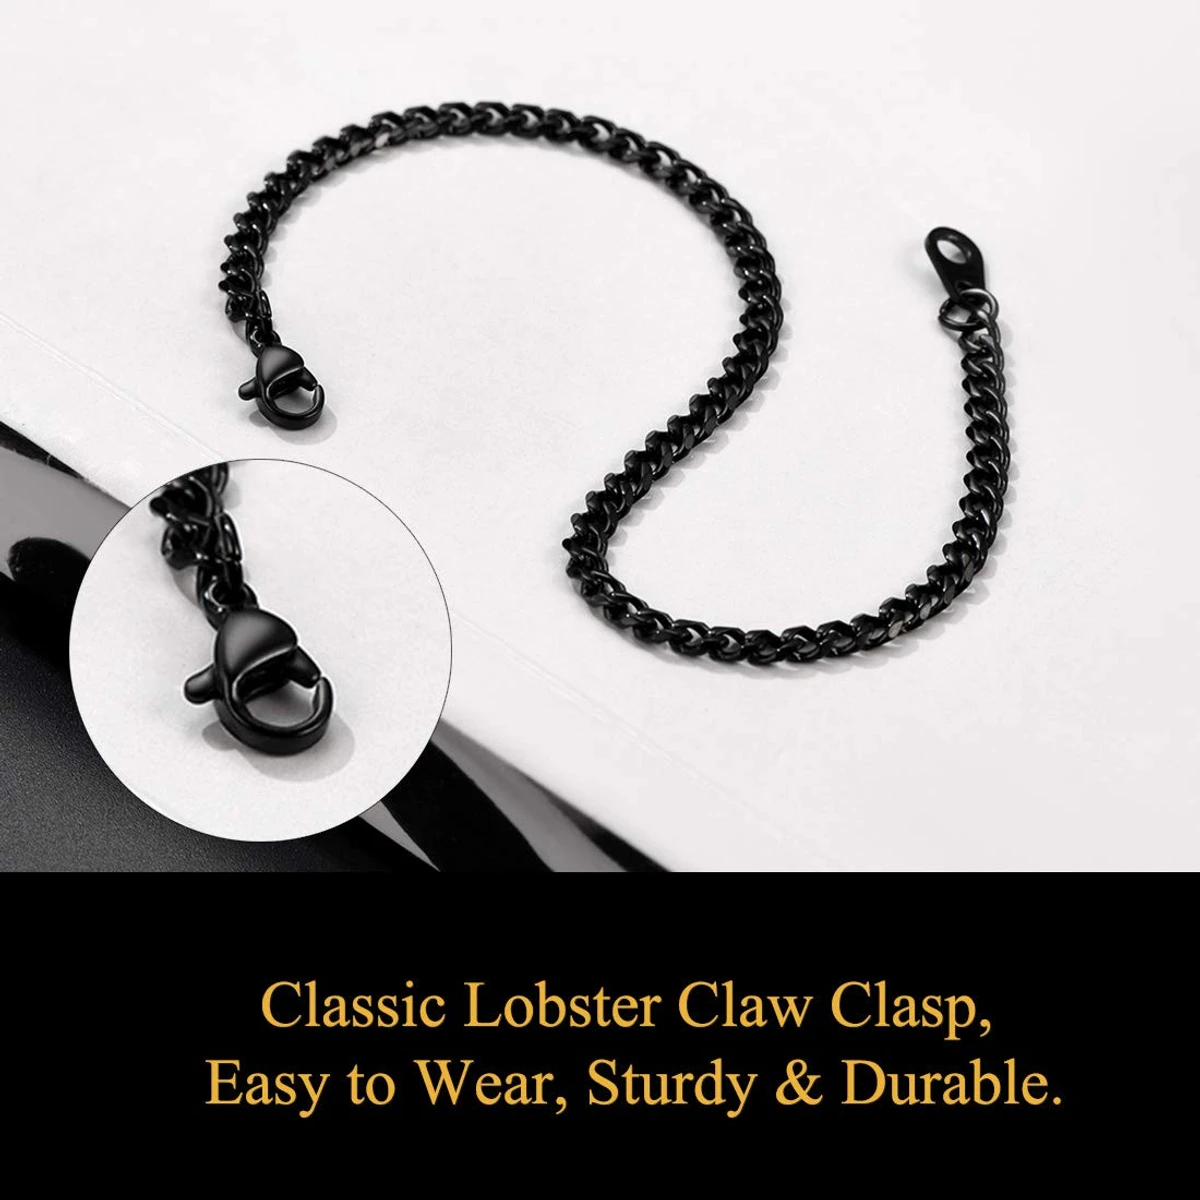 Black Fashion Man Jewelry Chain Bracelets